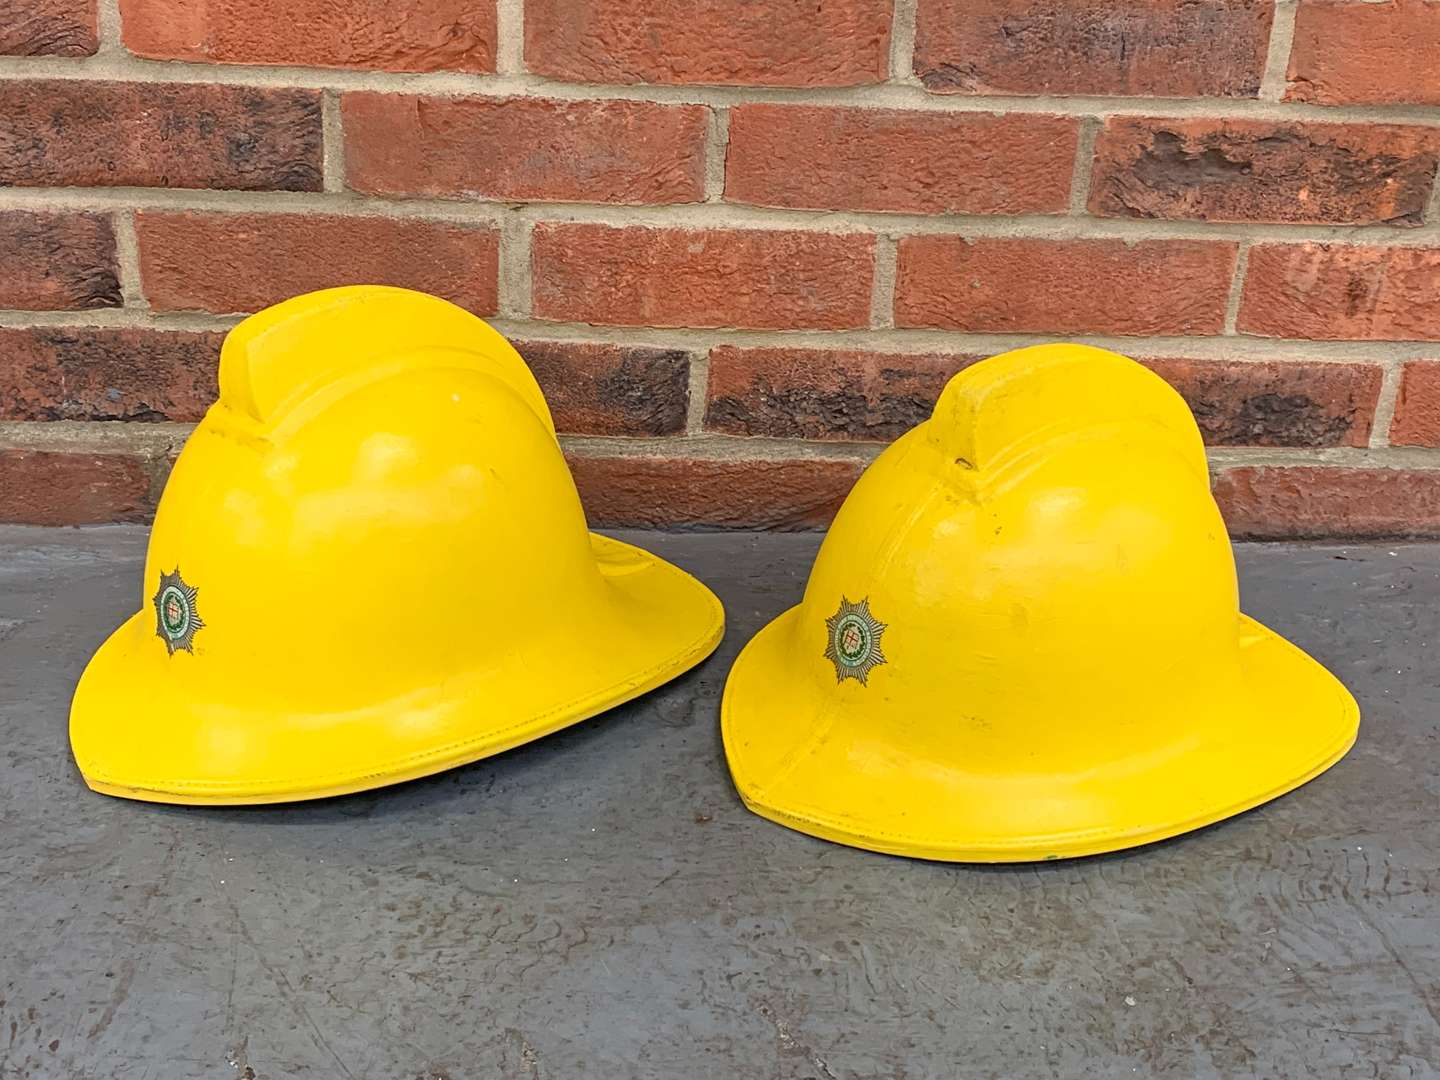 <p>Two Fireman Helmets</p>